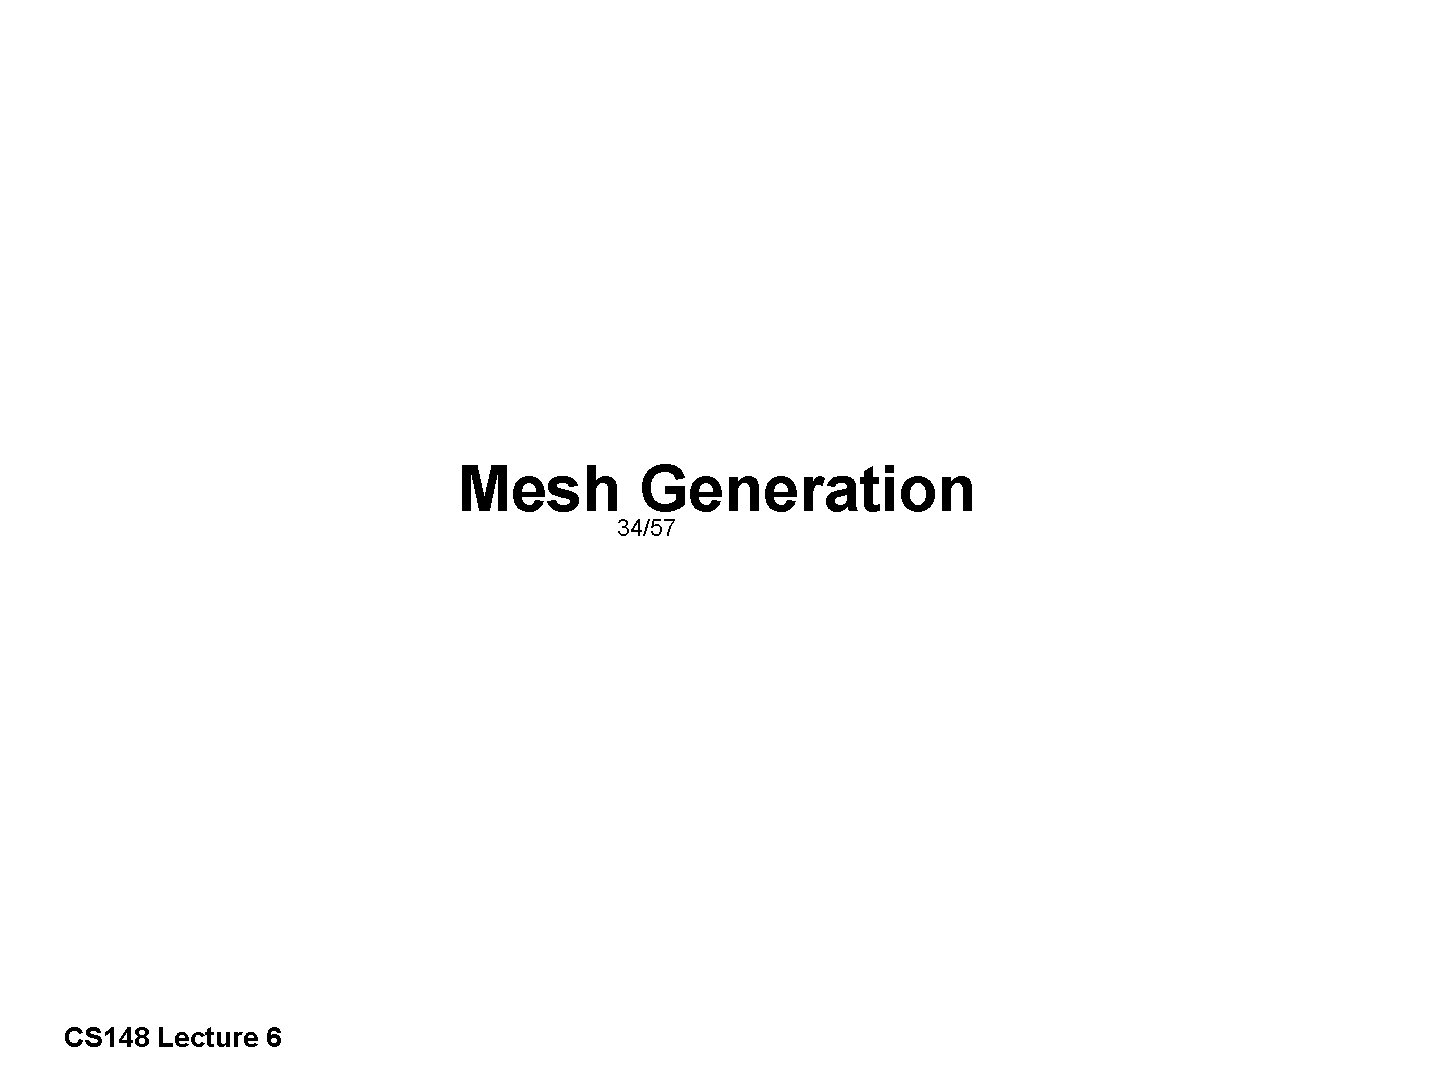 Mesh Generation 34/57 CS 148 Lecture 6 